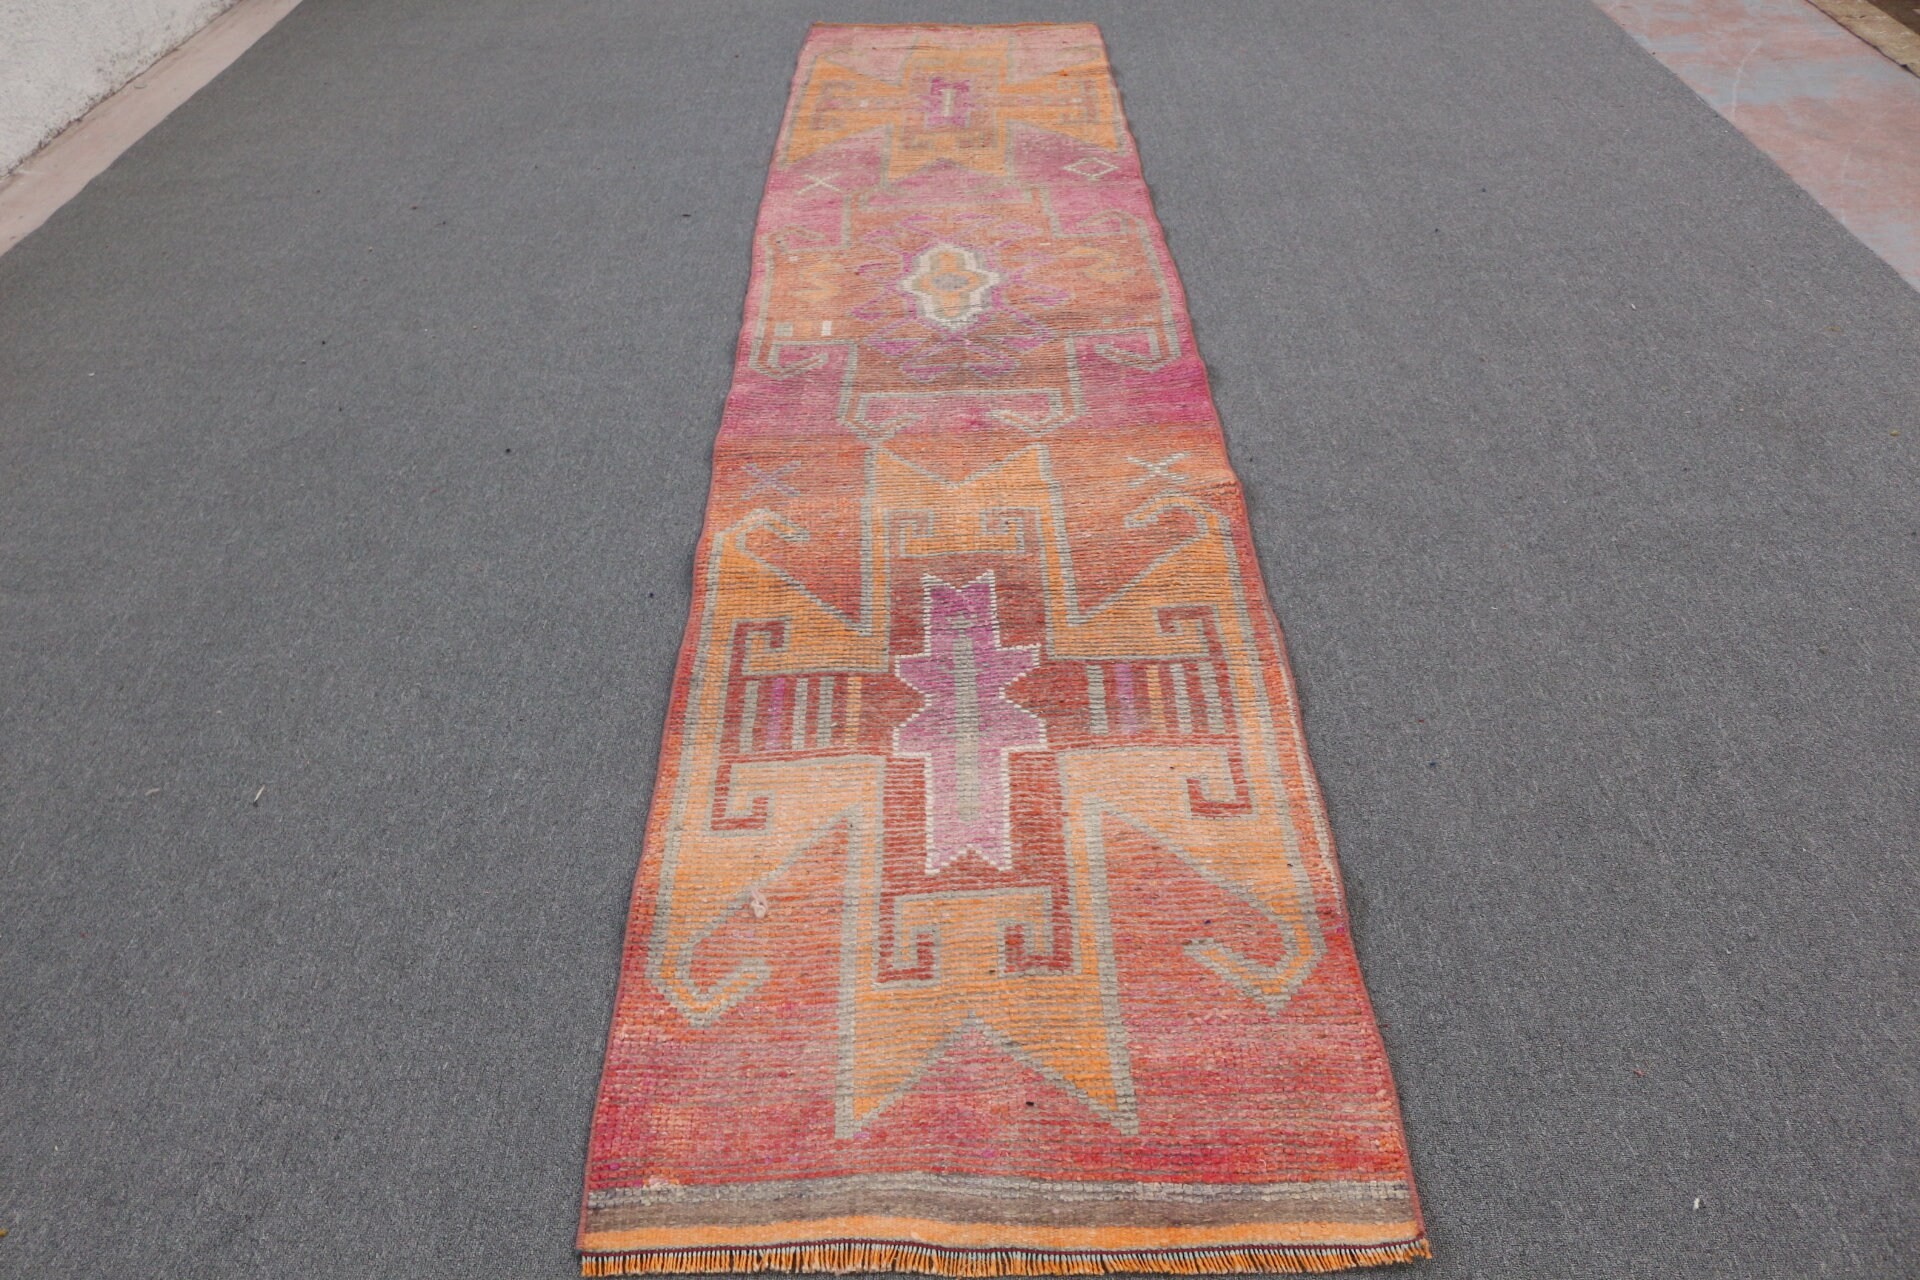 Corridor Rugs, Turkish Rugs, Stair Rug, Vintage Rugs, Boho Rug, Home Decor Rug, Anatolian Rug, Orange  2.7x12.4 ft Runner Rug